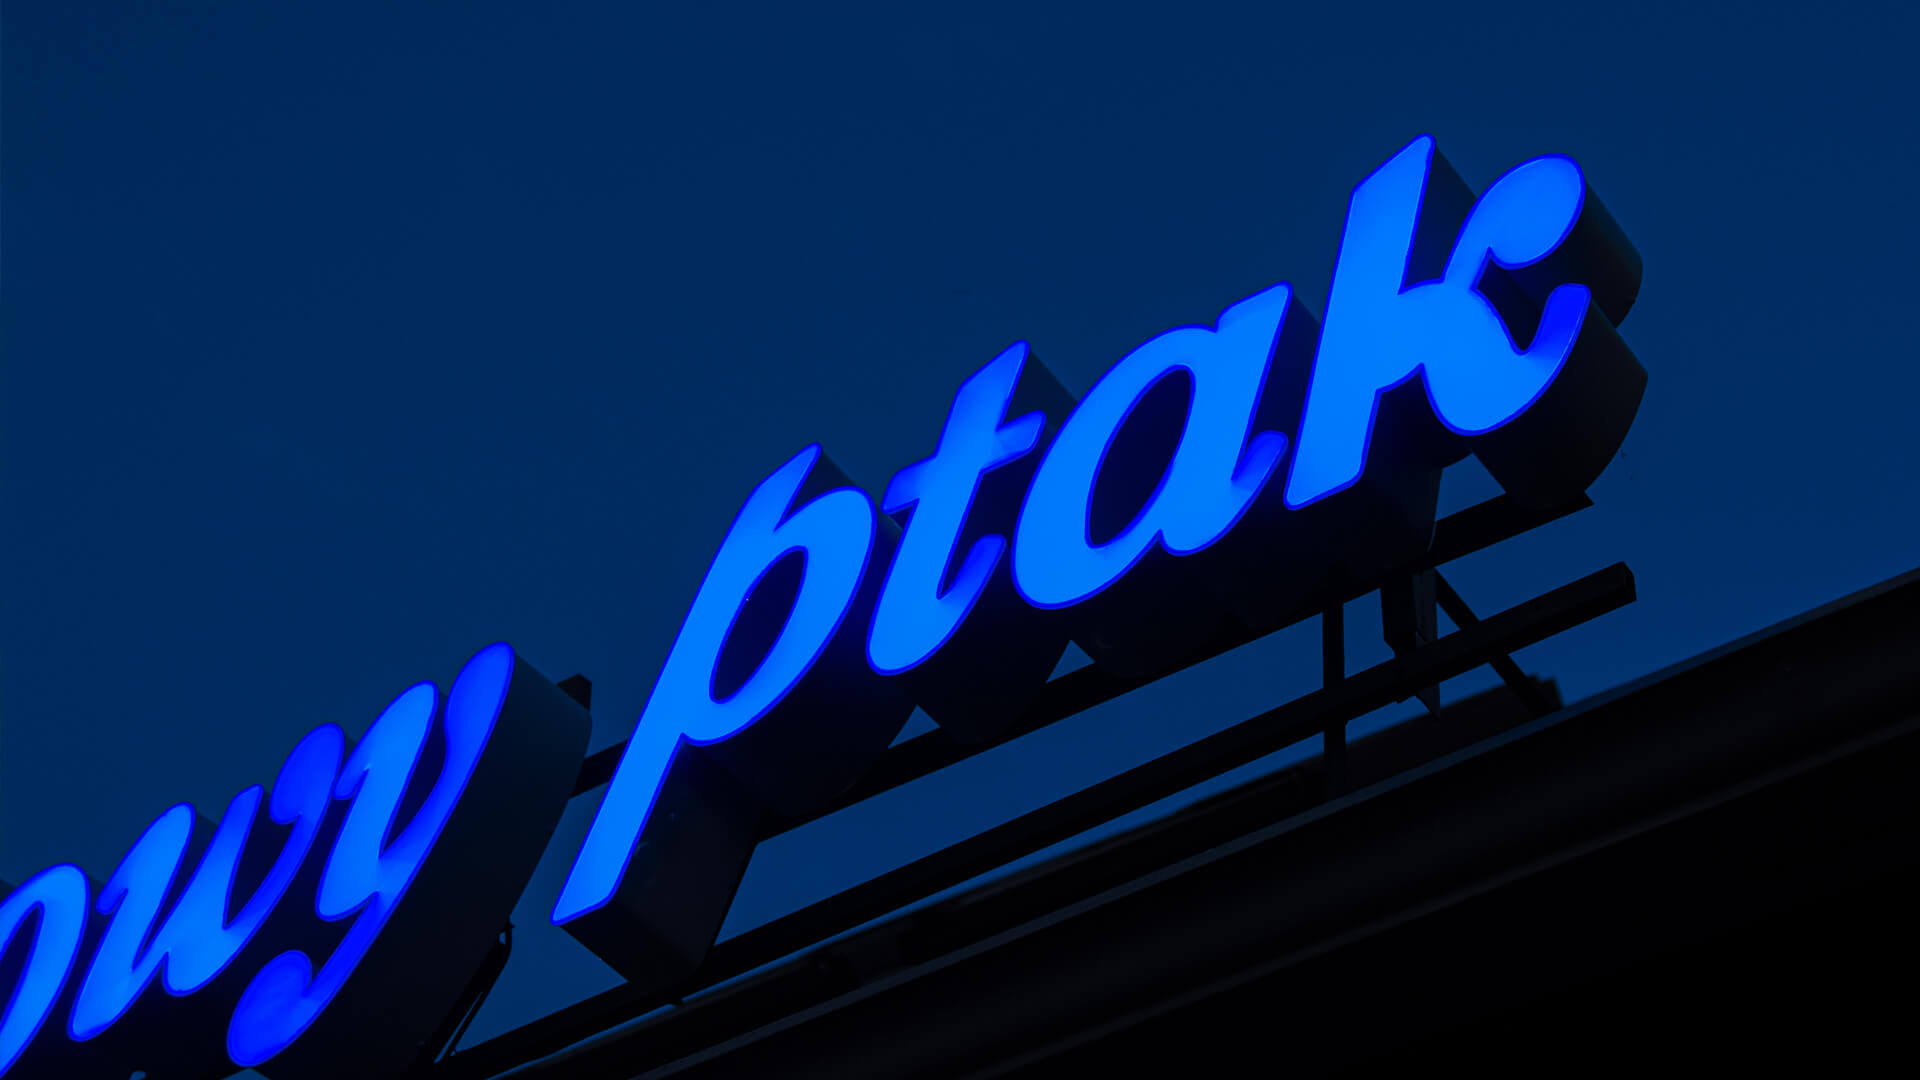 Granatvogel-Restaurant - navy-blue-bird-letter-led-space-lit letters on the roof 